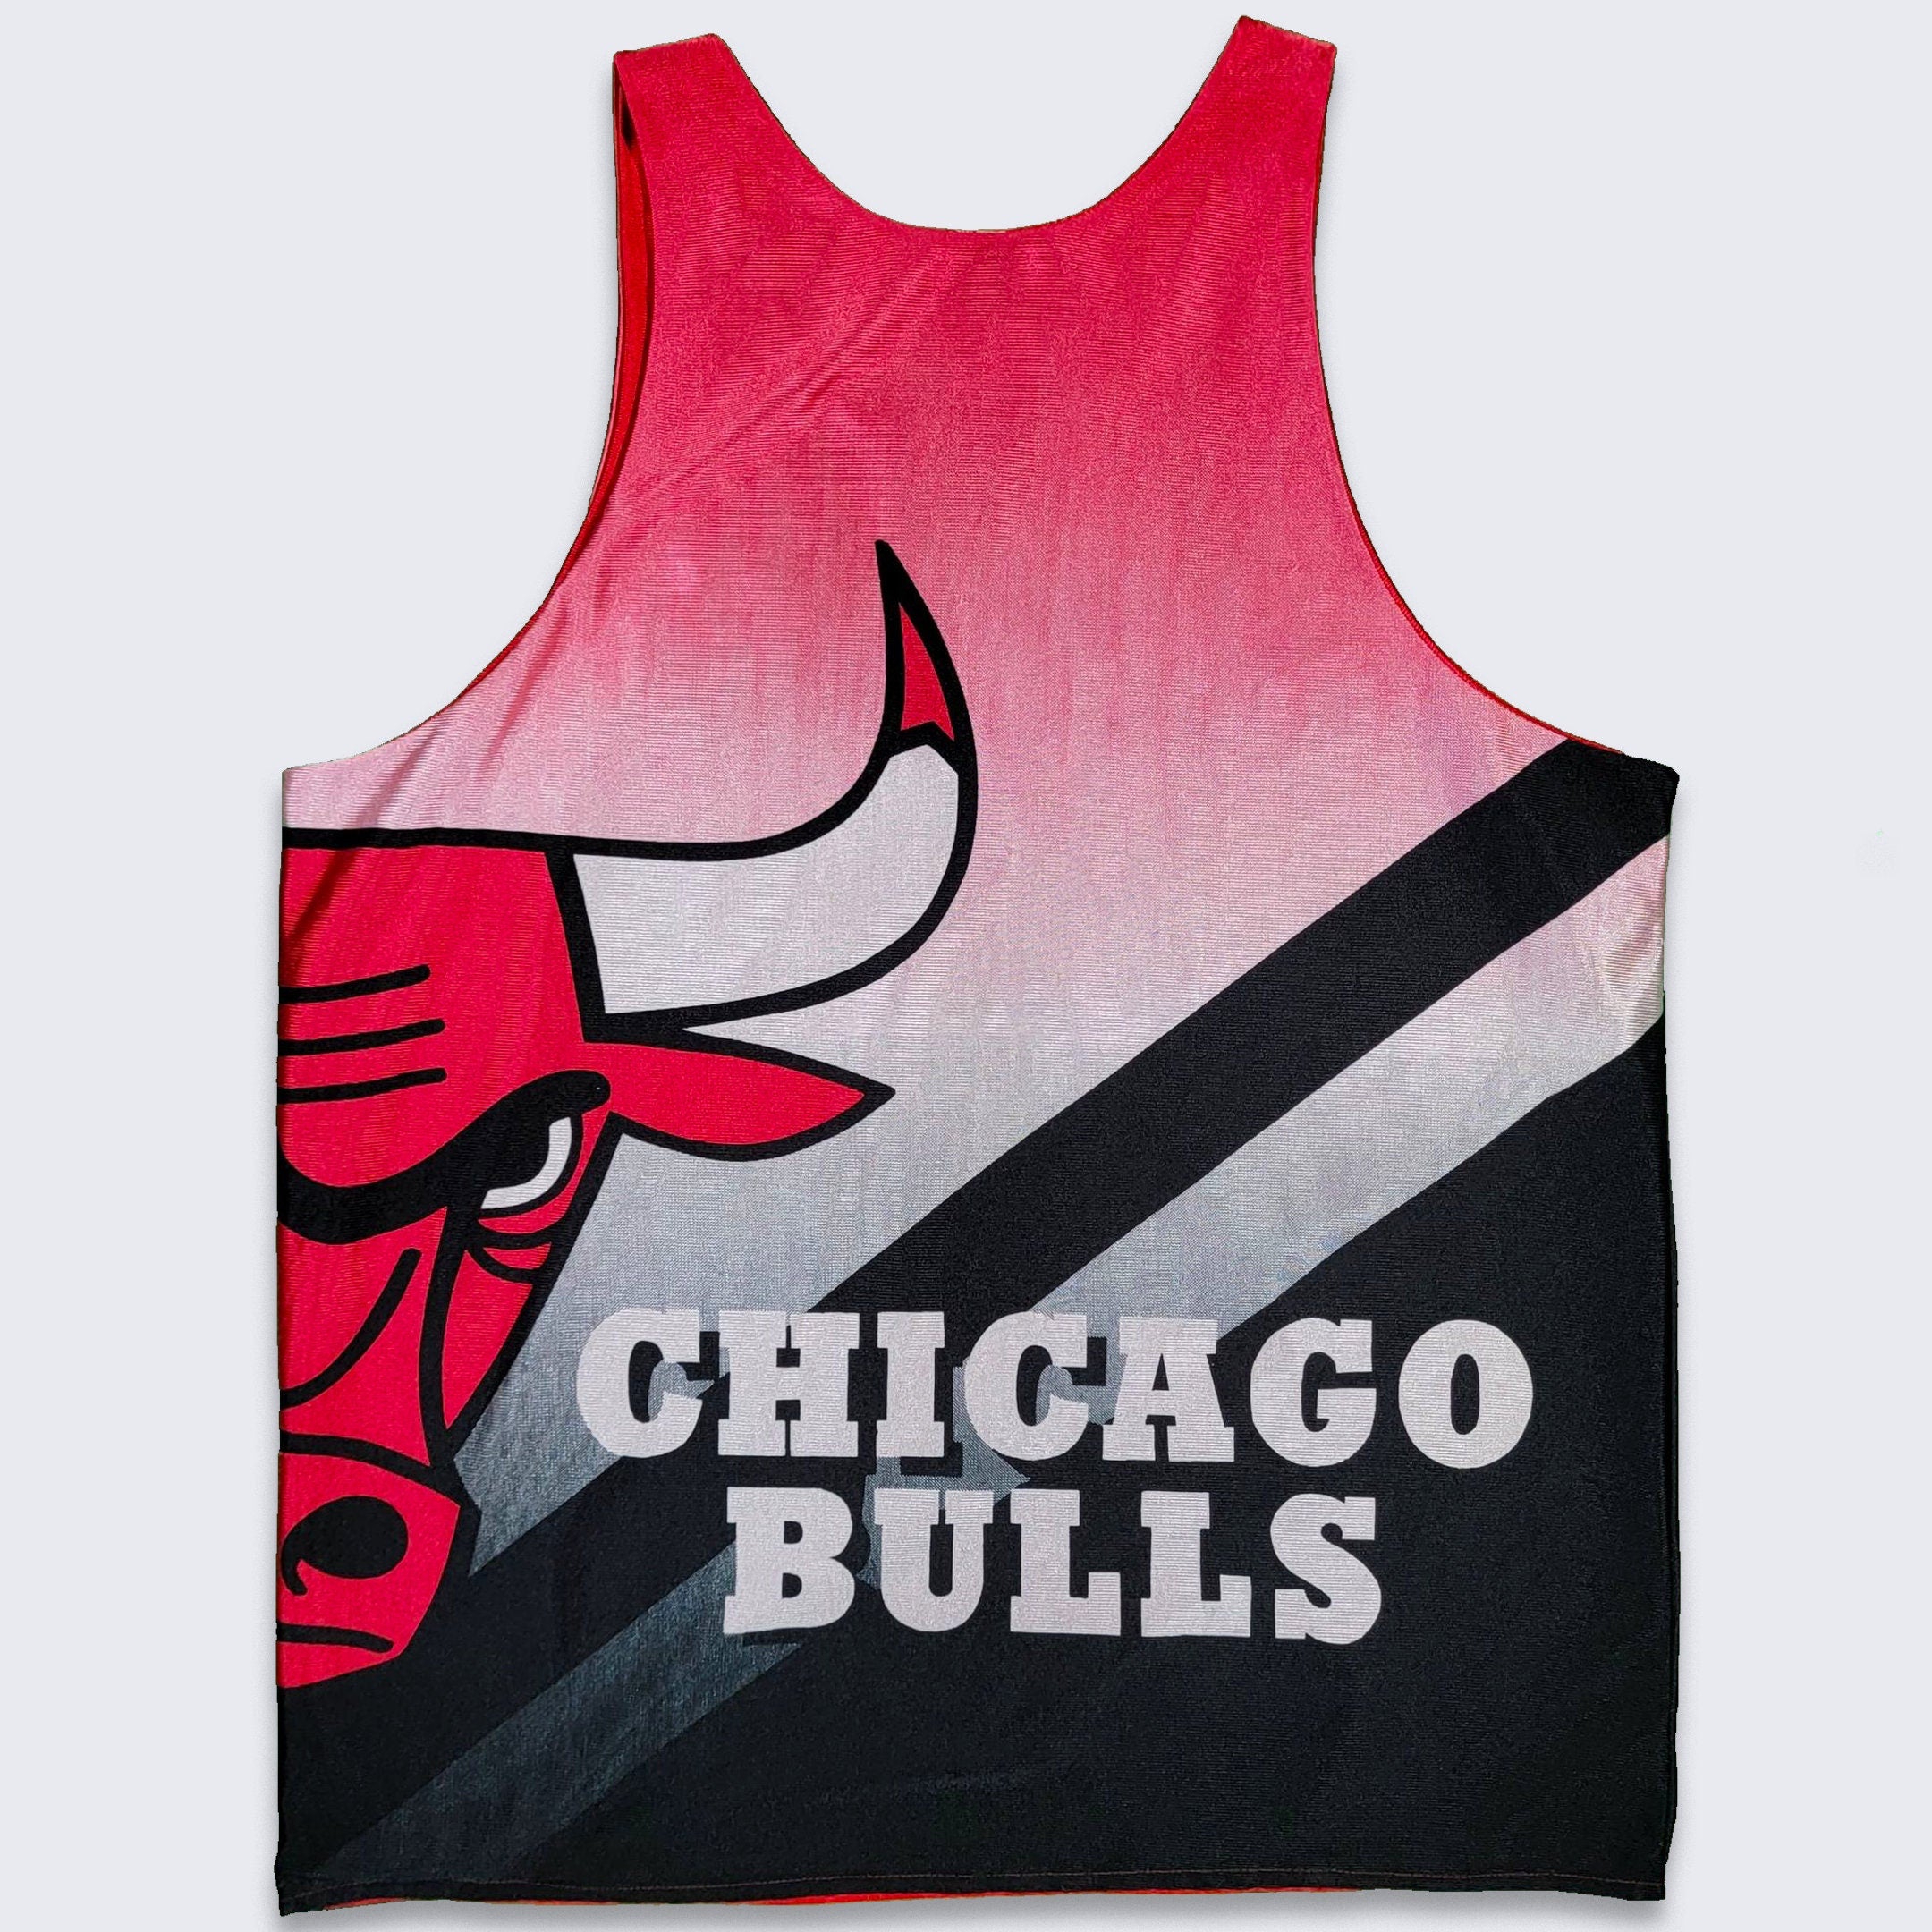 Vintage 90s Chicago Bulls NBA Starter Jersey Size Medium 